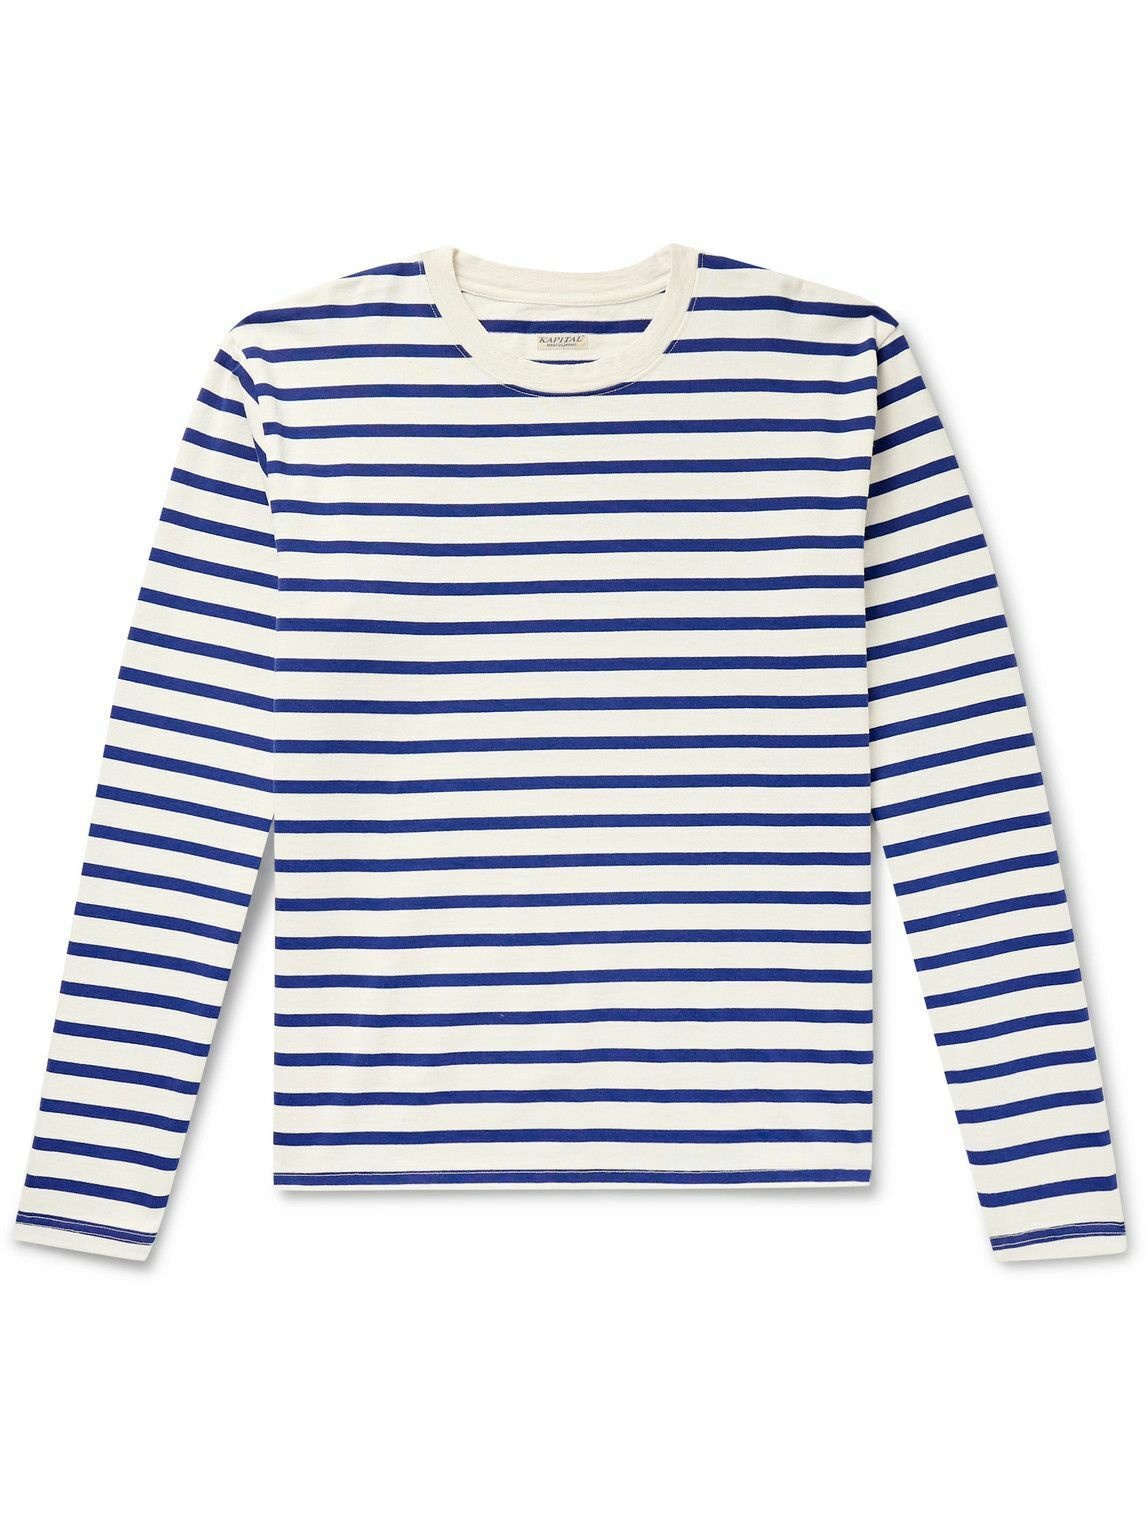 Photo: KAPITAL - Printed Striped Cotton-Jersey T-Shirt - Blue